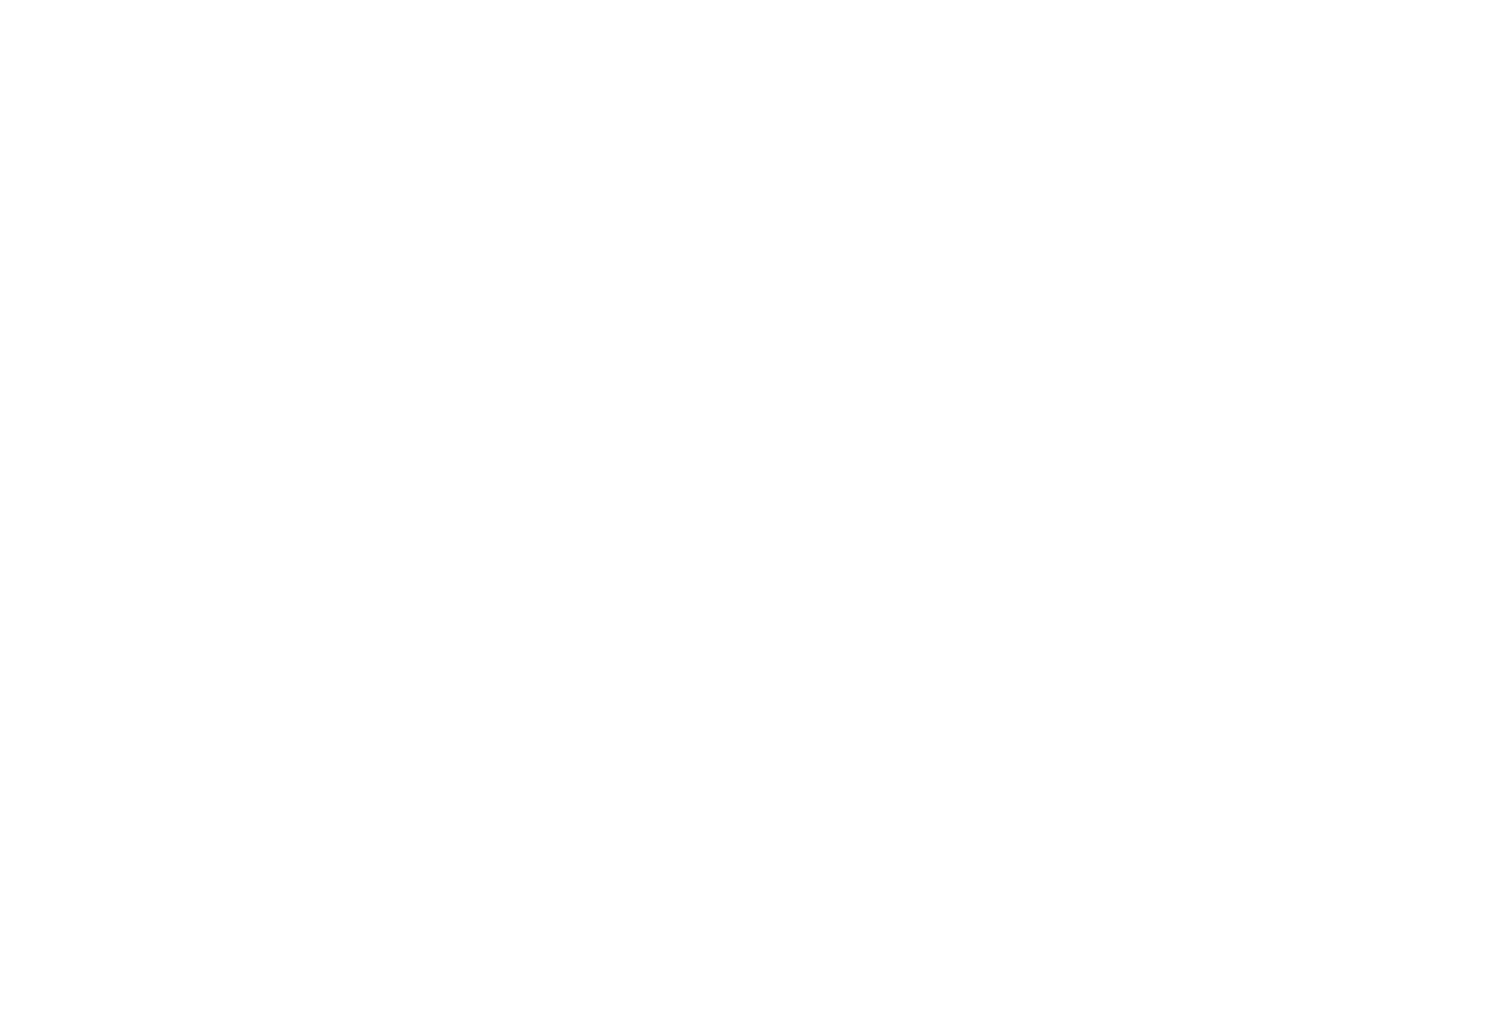 The Loft Salon